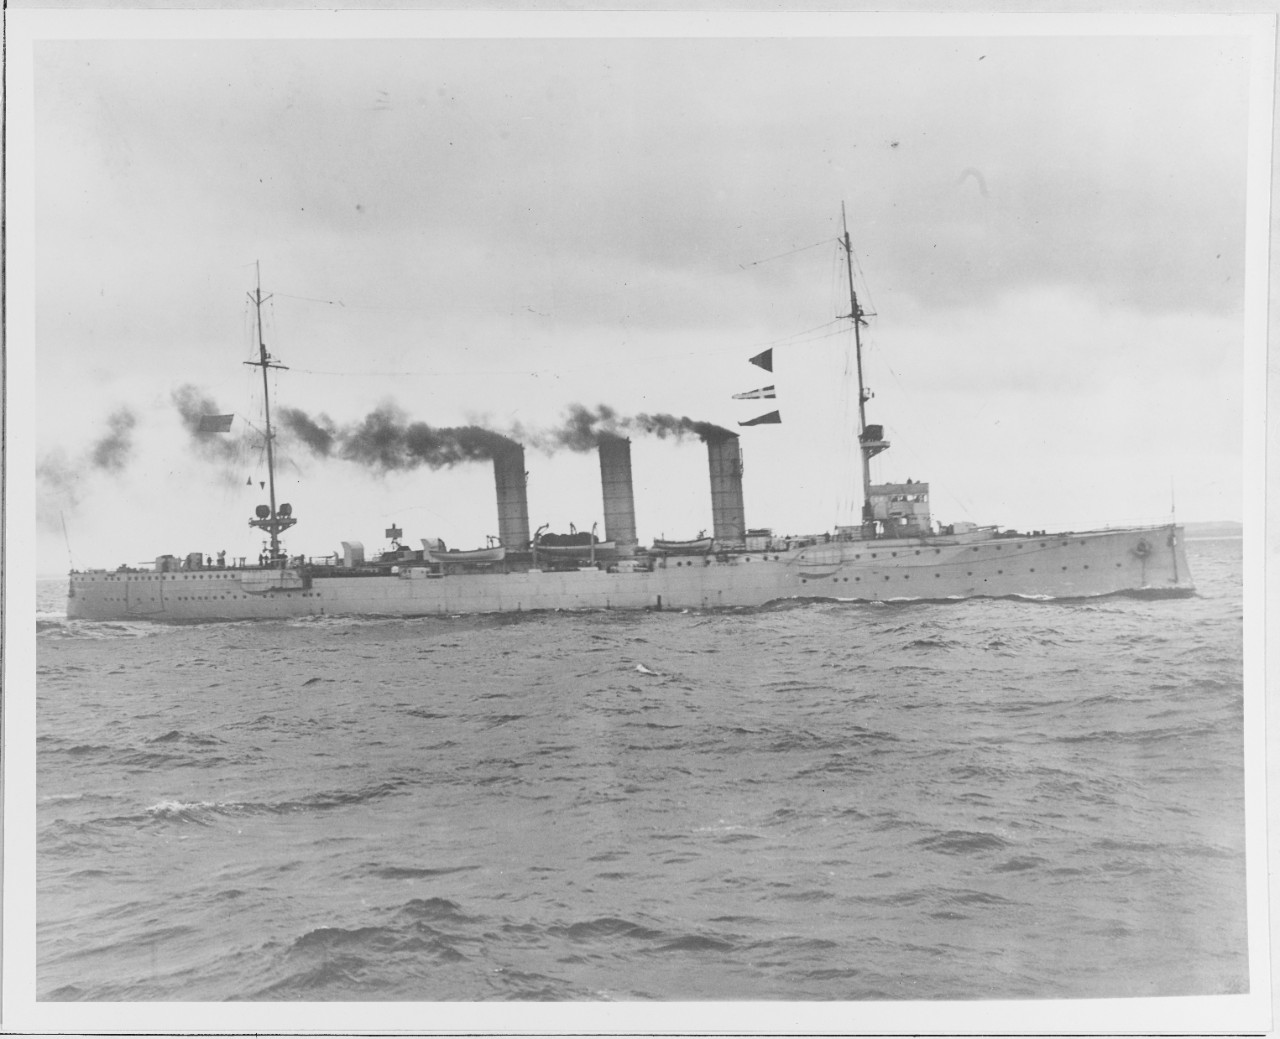 SMS AUGSBURG (German light cruiser, 1909)